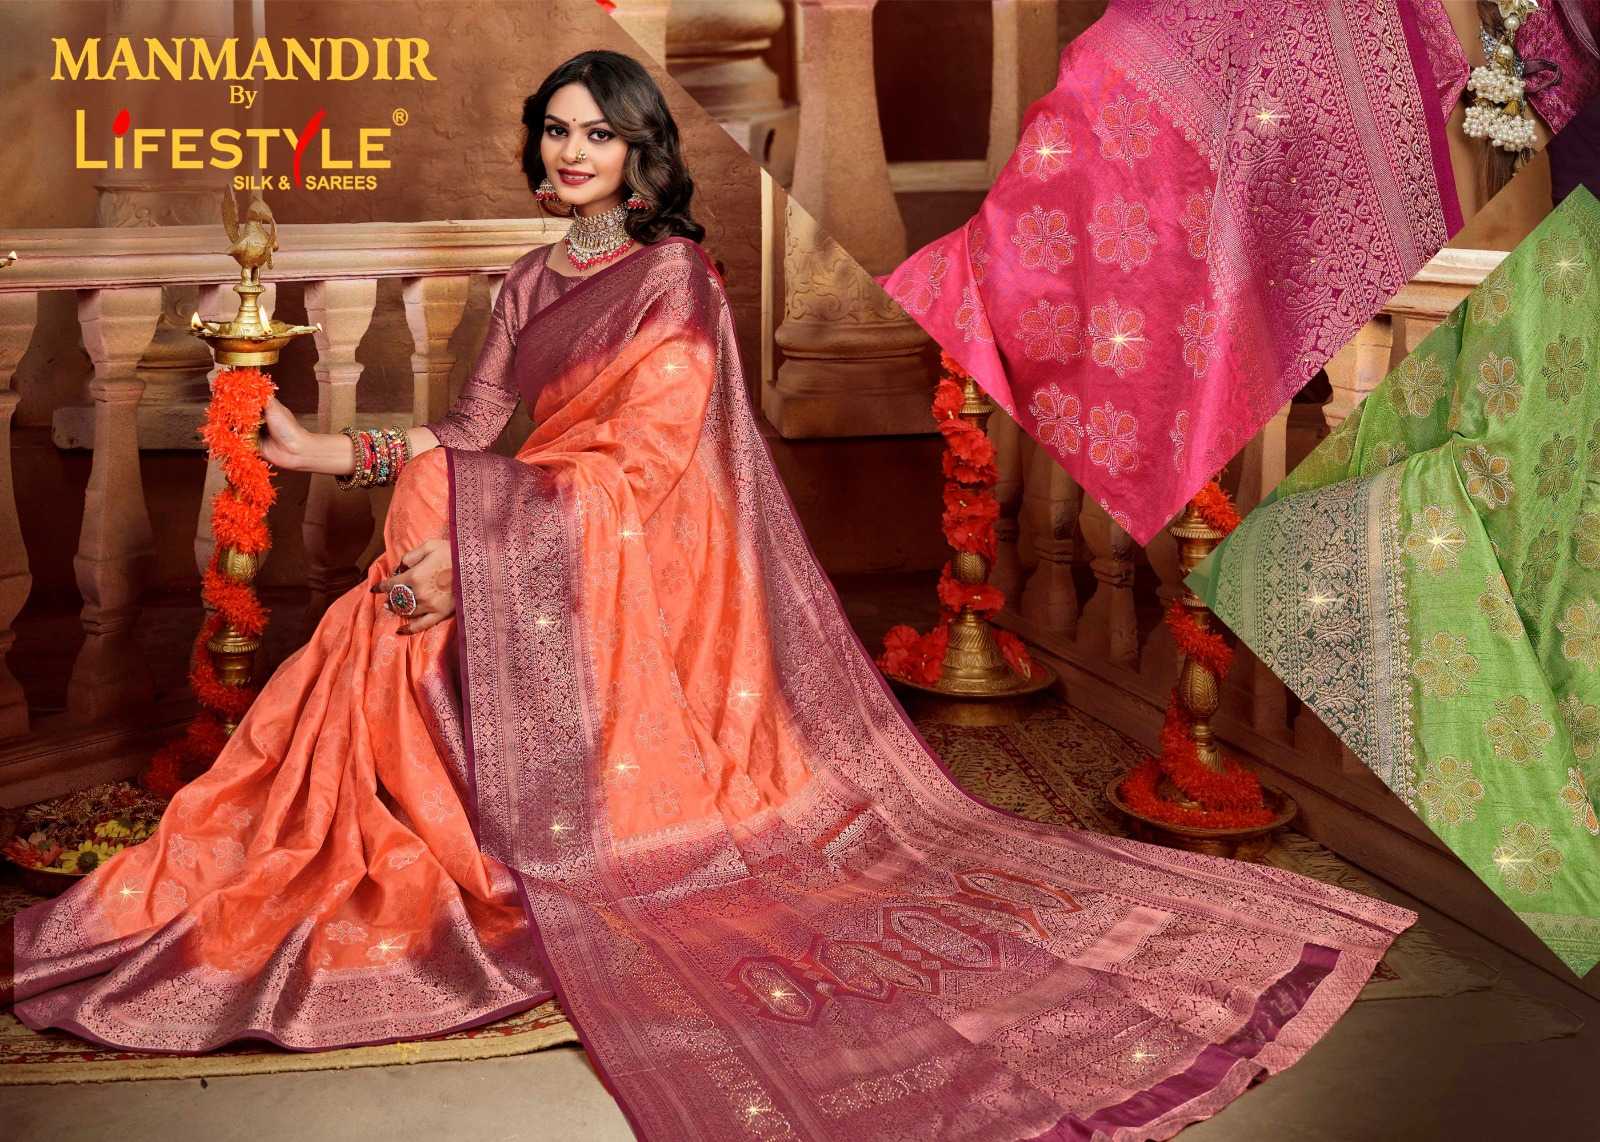 lifestyle man mandir vol 1 25001-25004 beautiful wedding sarees